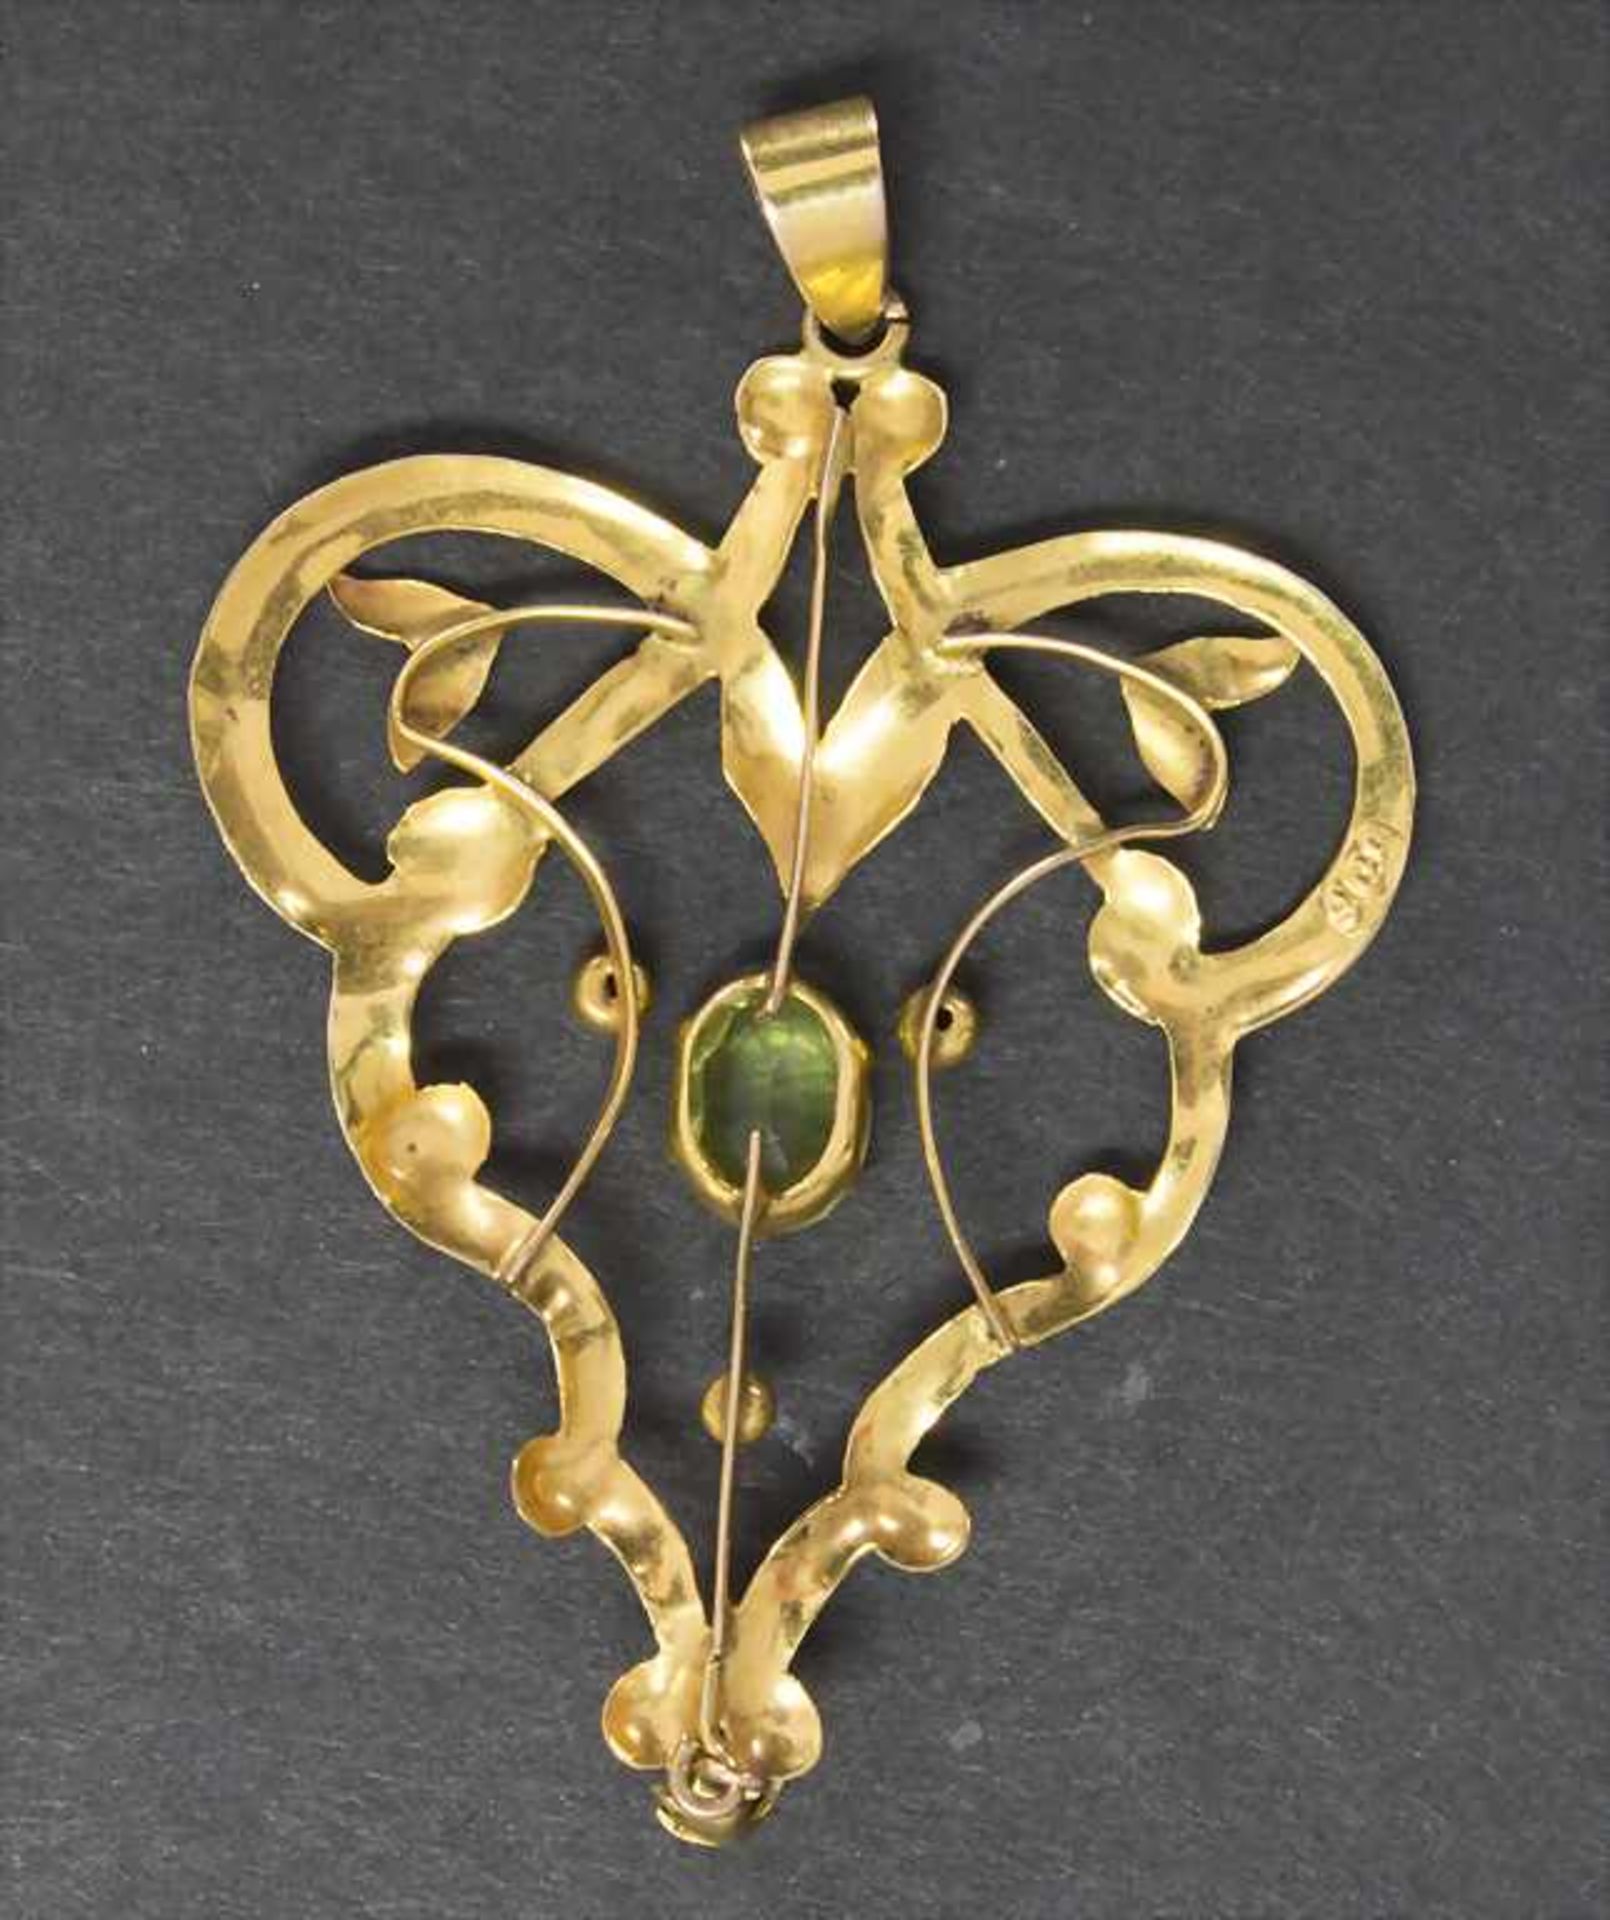 Jugendstil Anhänger / An Art Nouveau pendant, England, um 1900Material: Gelbgold, grüner Peridot/ - Image 2 of 2